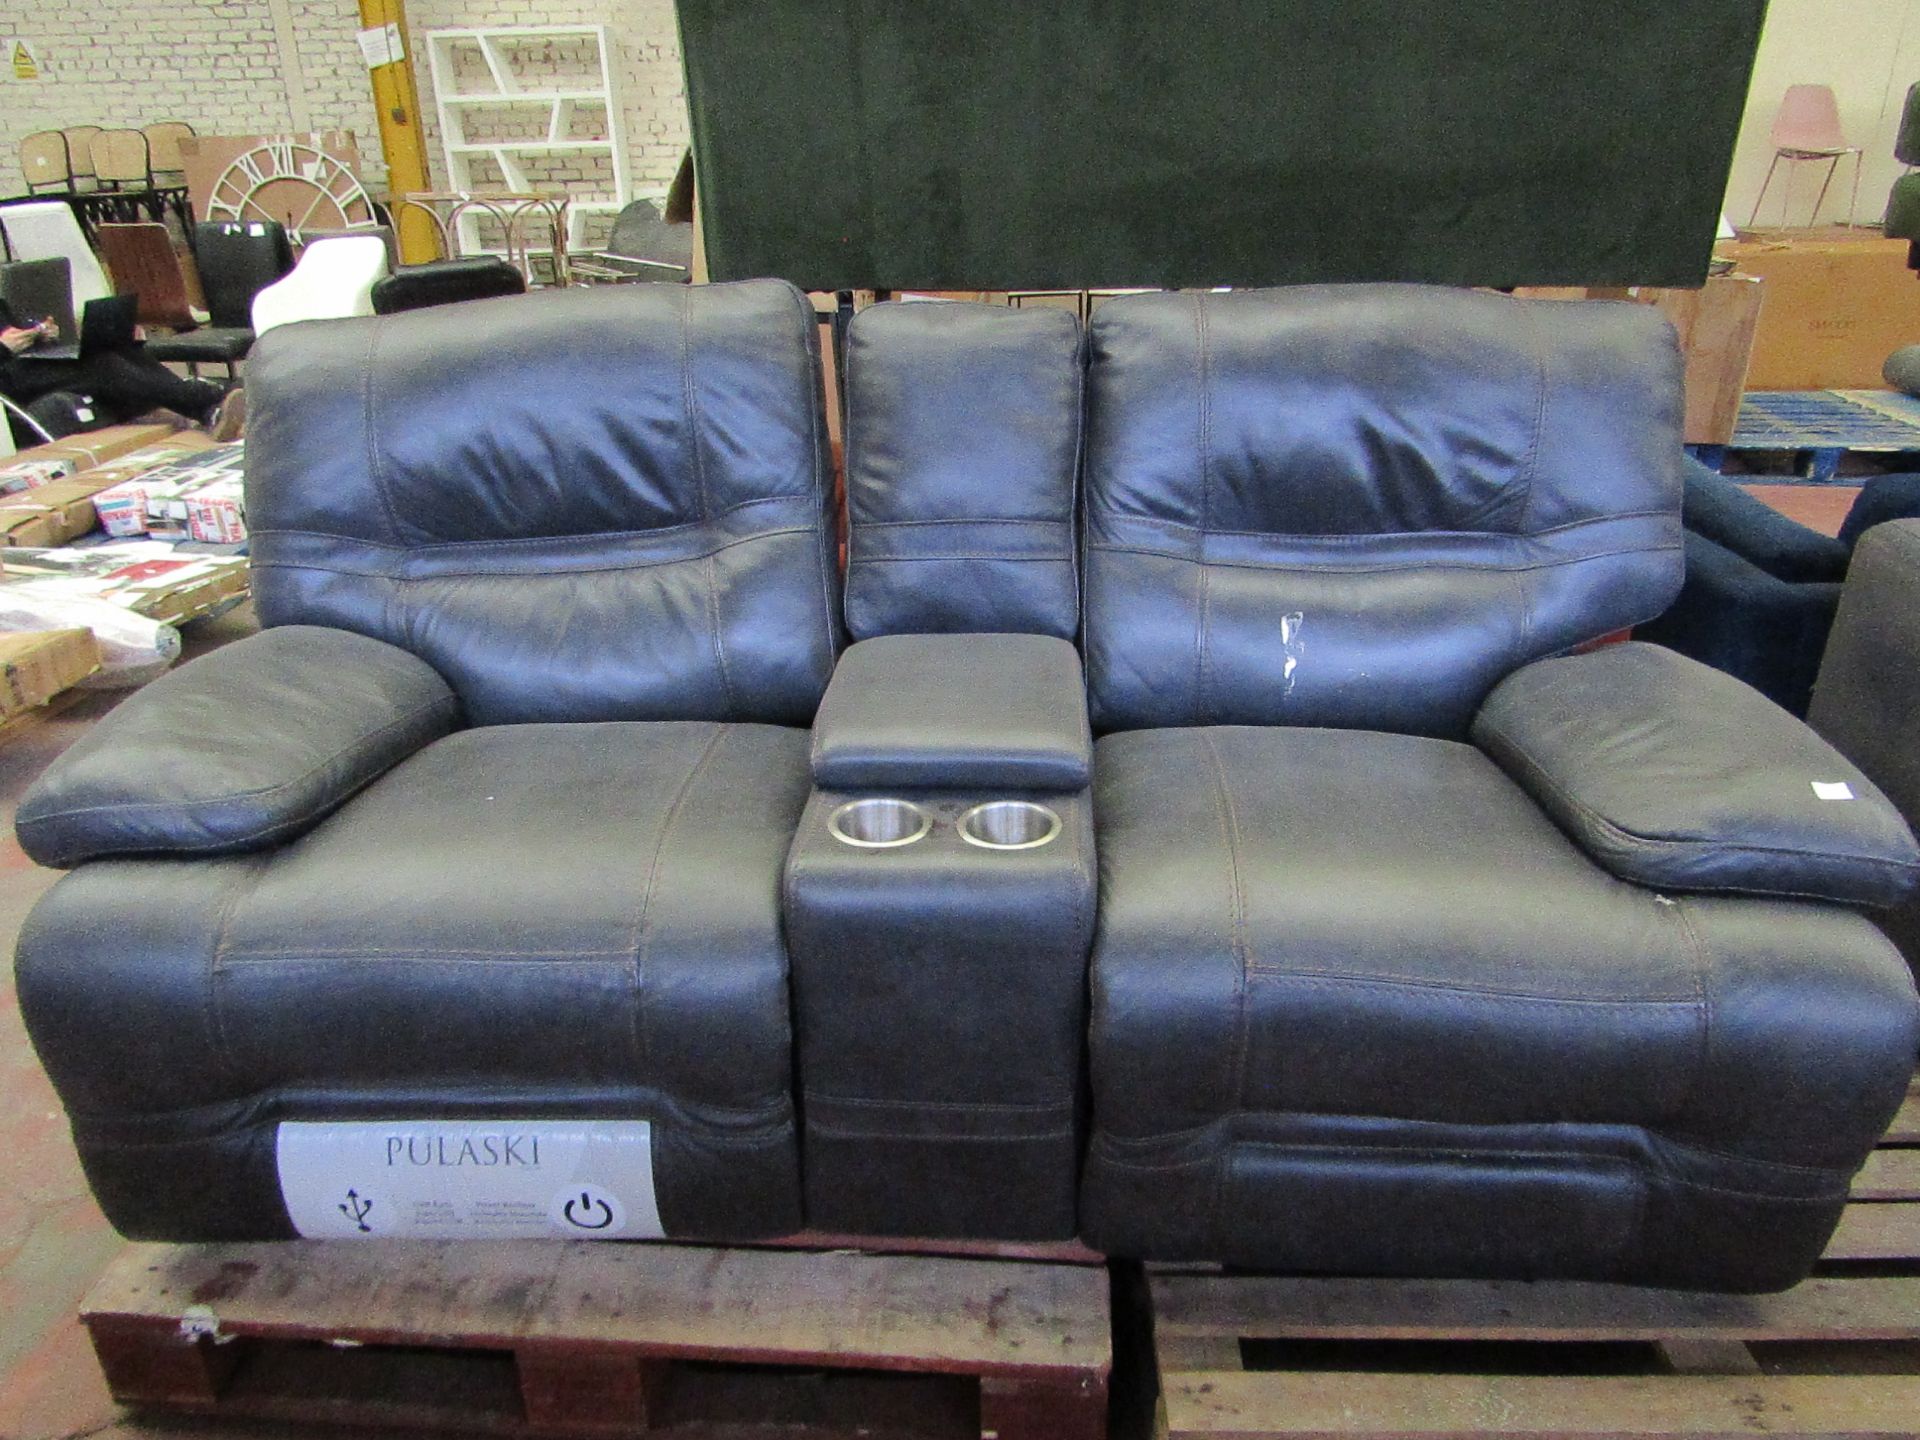 1x Costco Pulaski 2 Seater Cinema Sofa - Power Recliner with USB Ports - Dark Grey Leather -